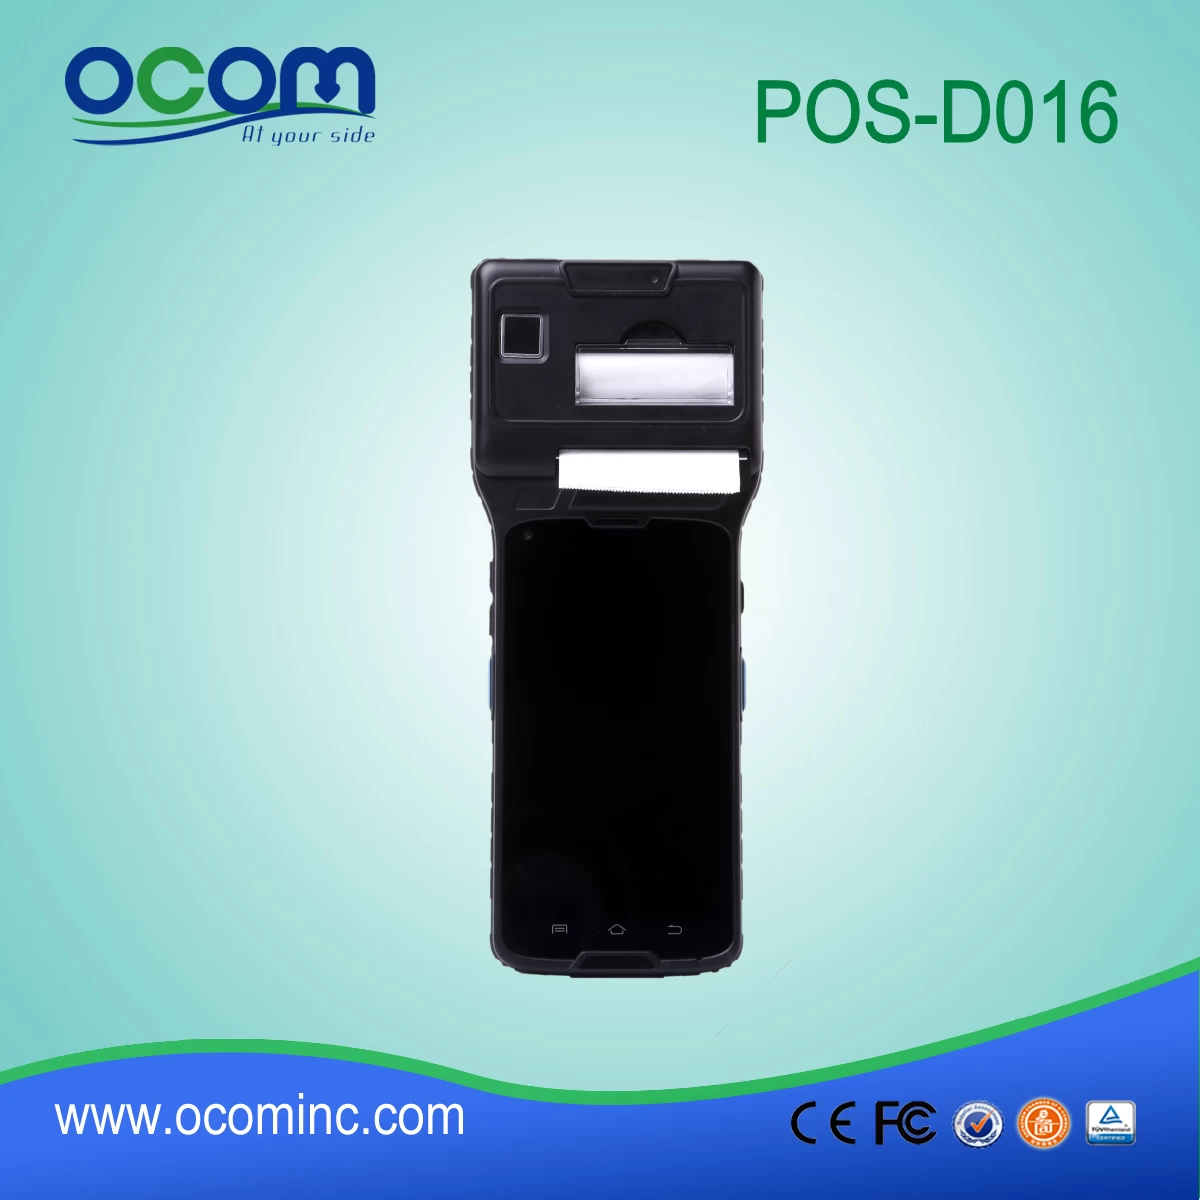 China Manufacturer Android Pos Terminal for Logistics ---OCBS-D016